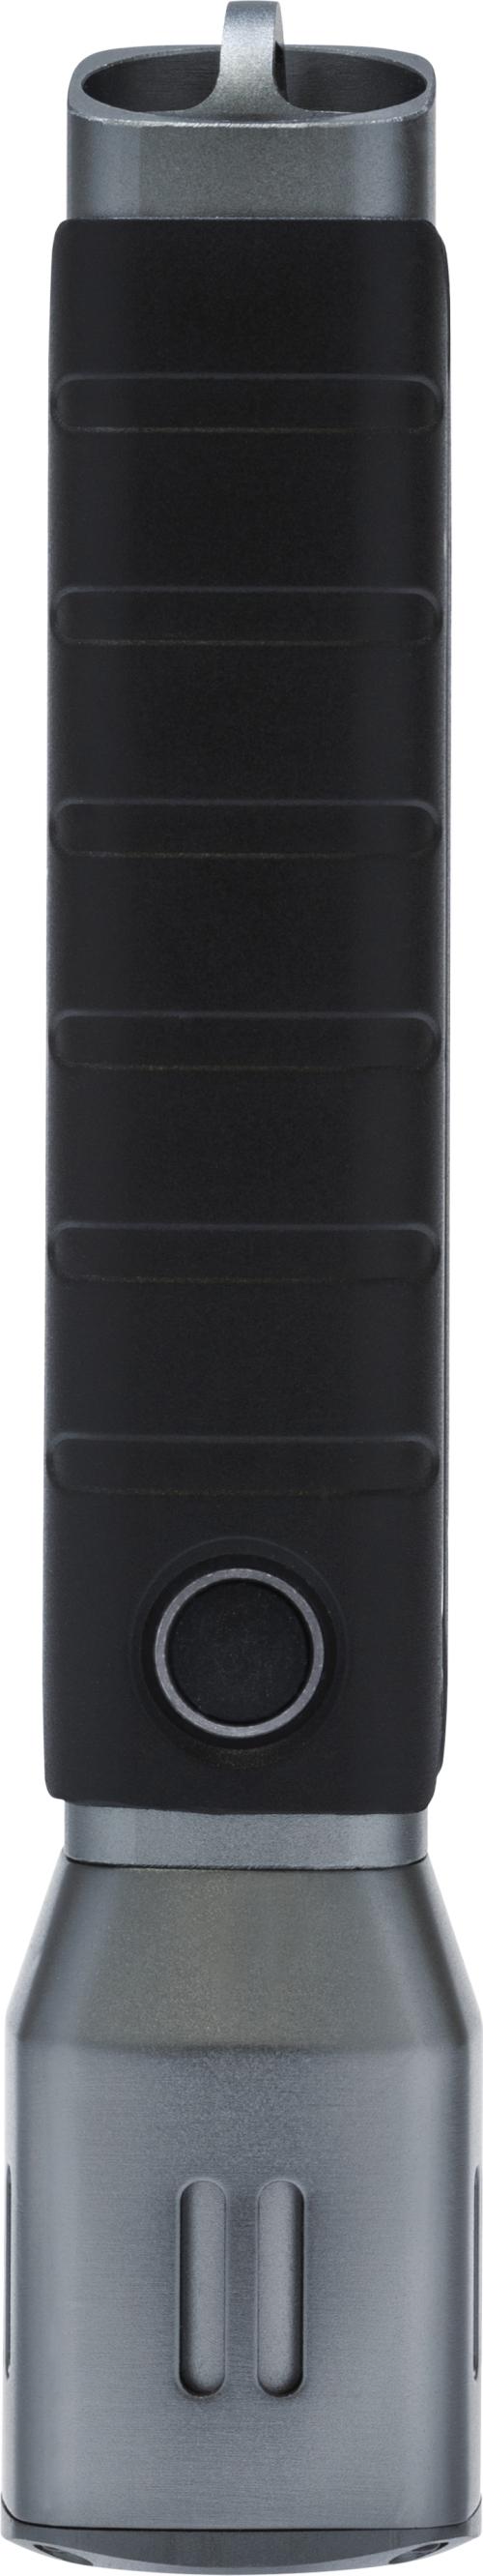 Flashlight TL-517, 17.2 cm